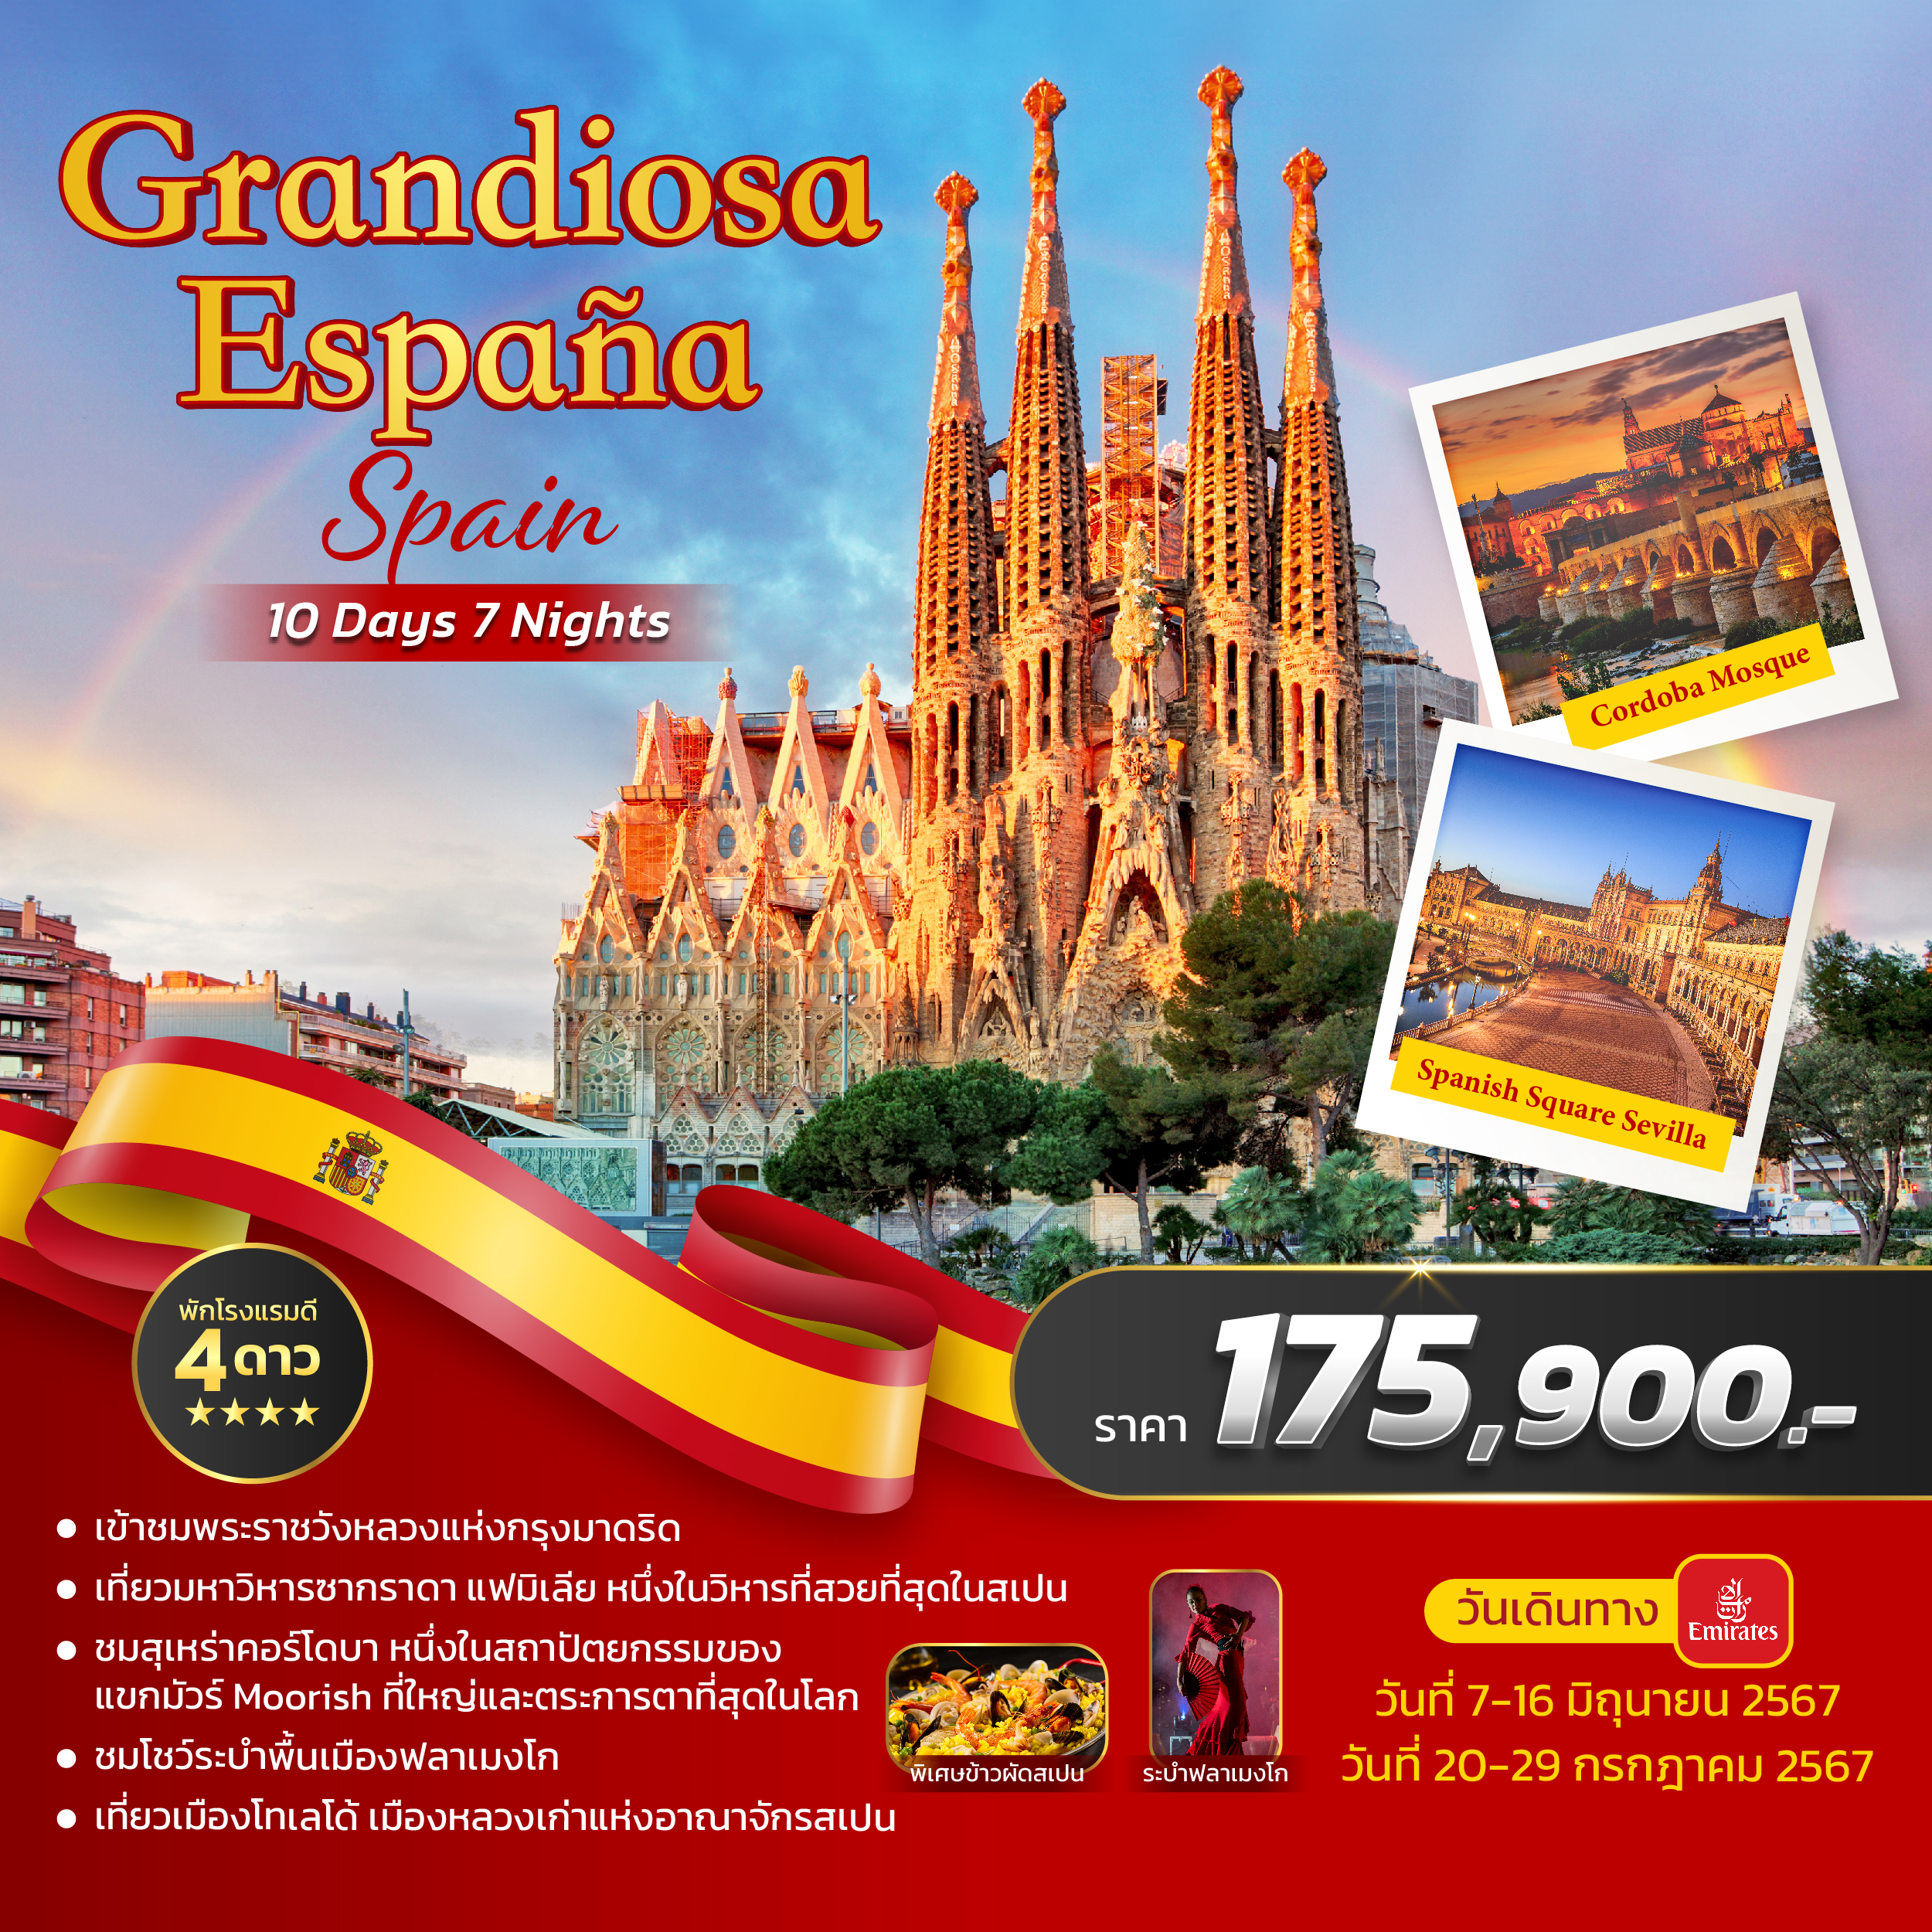 GRANDIOSA ESPAÑA SPAIN 10 วัน 7 คืน by Emirates